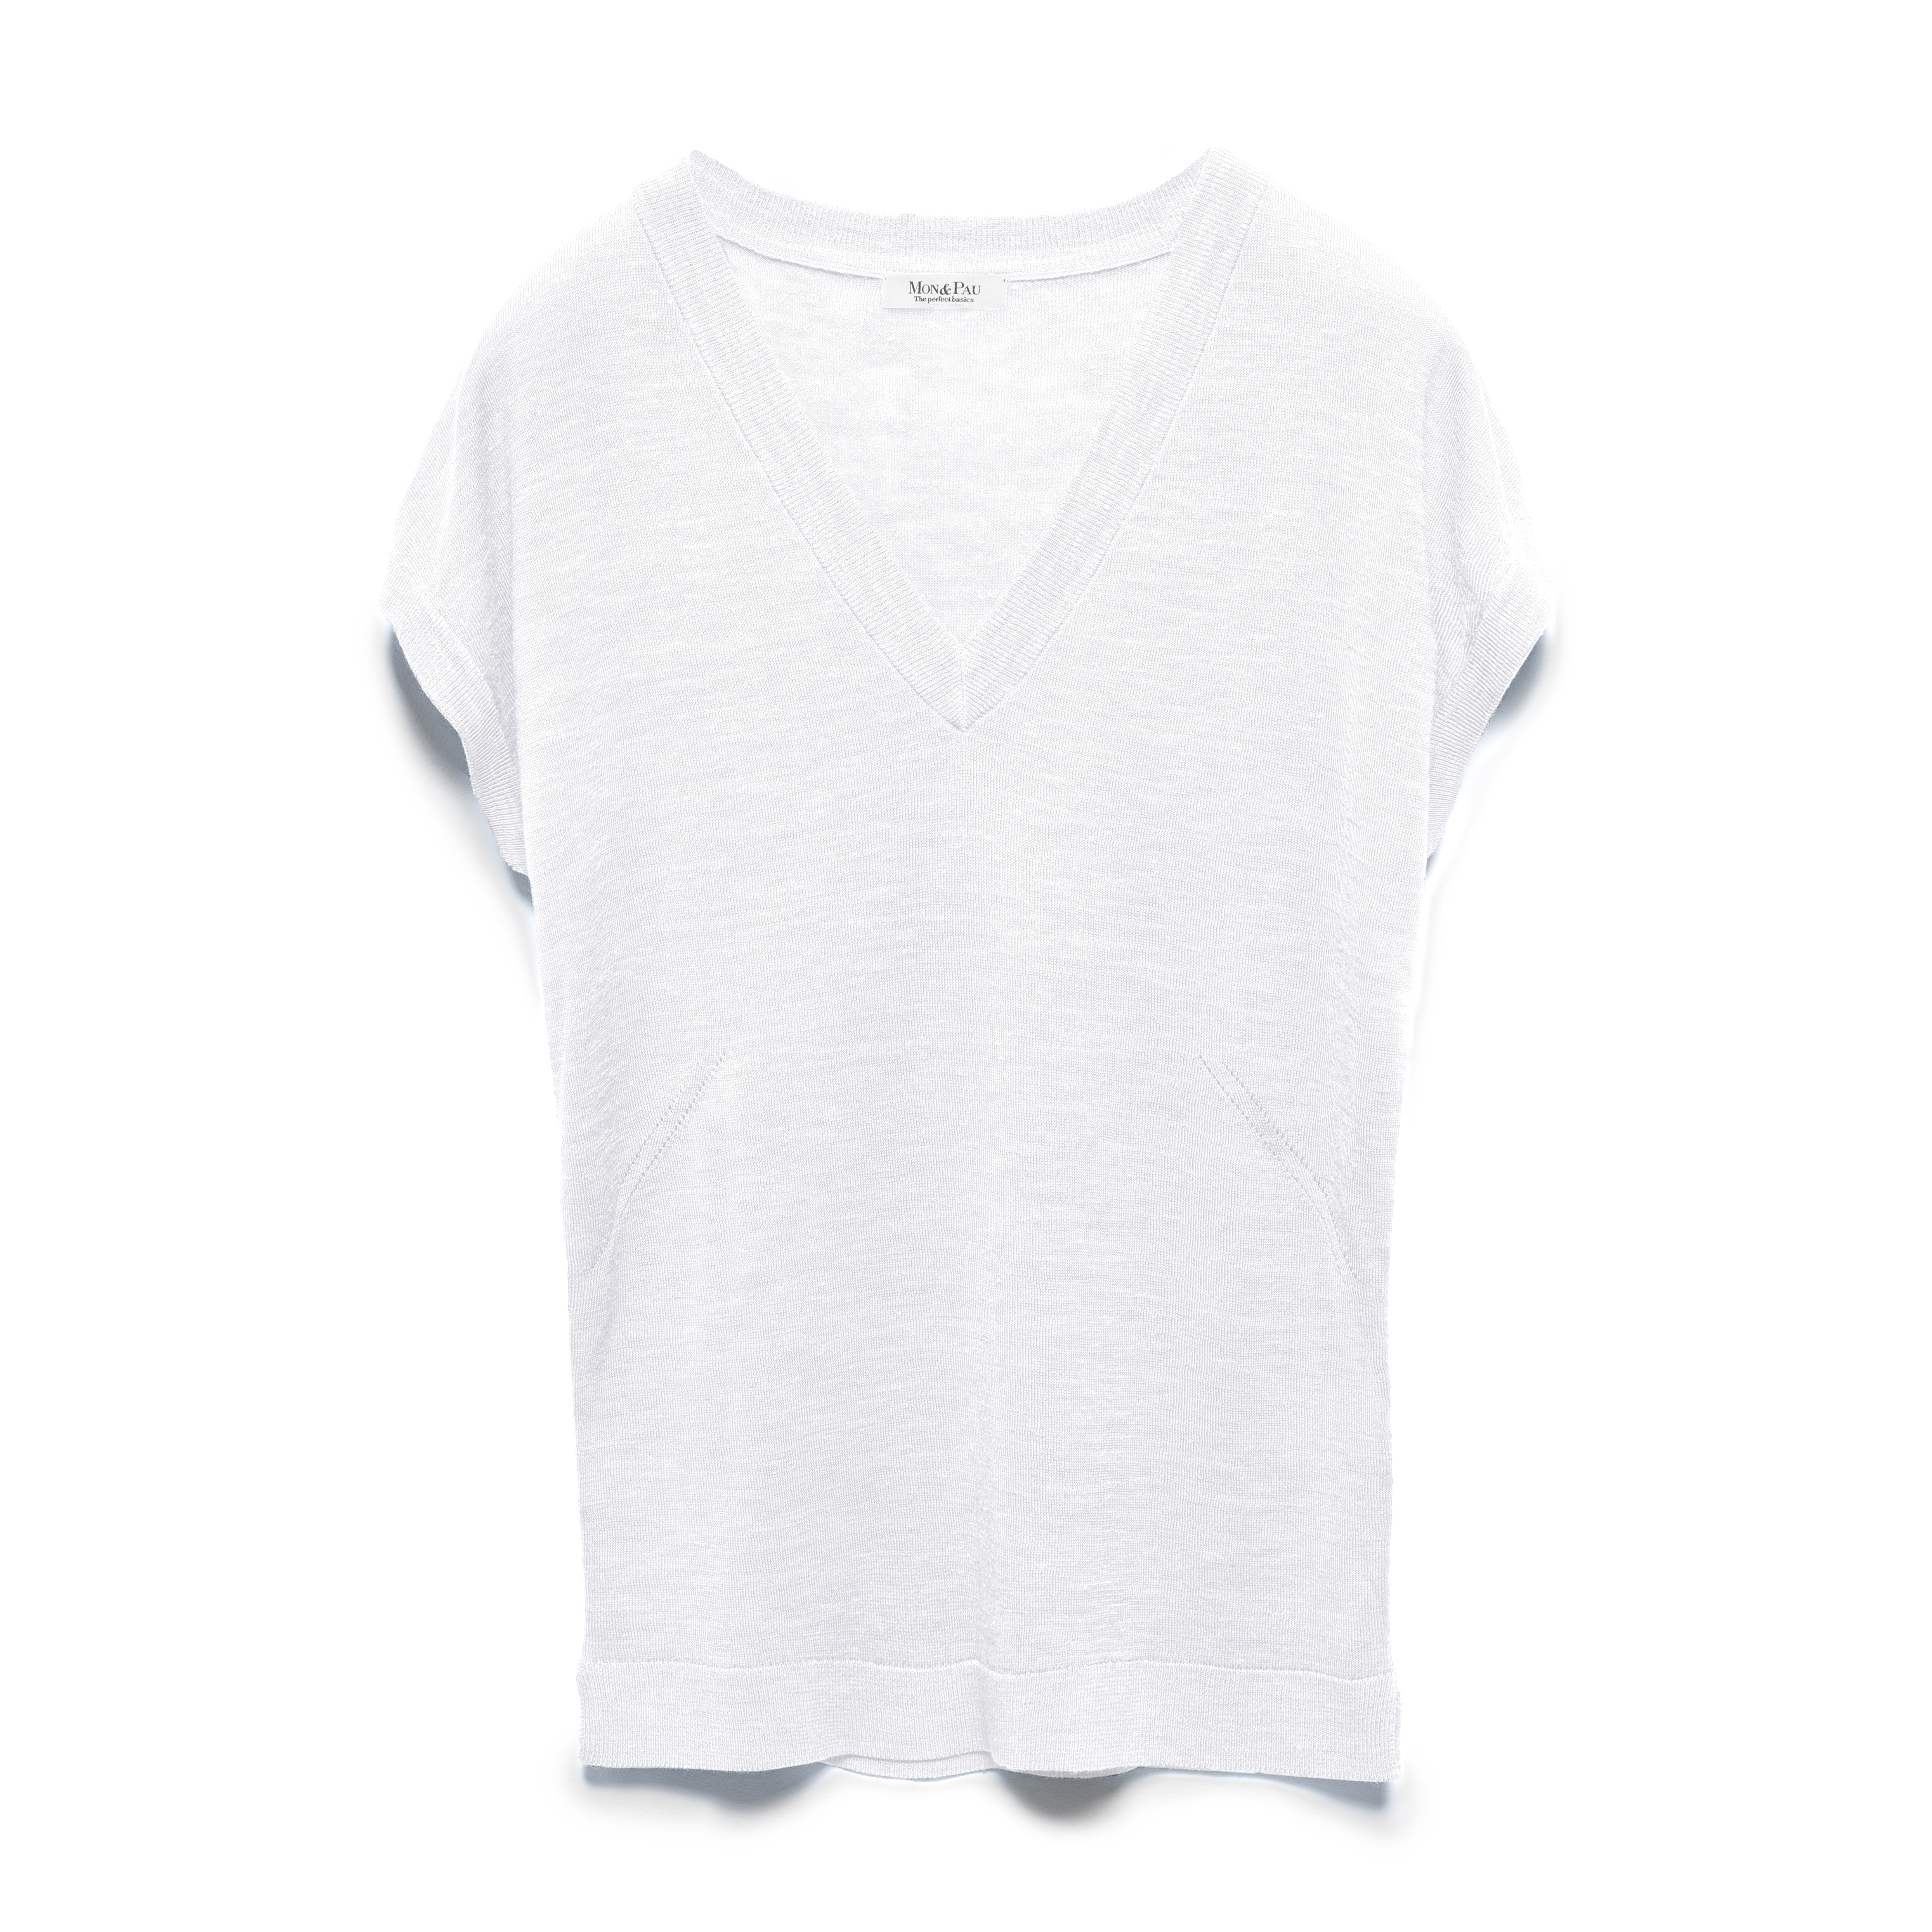 Camiseta blanca sin mangas